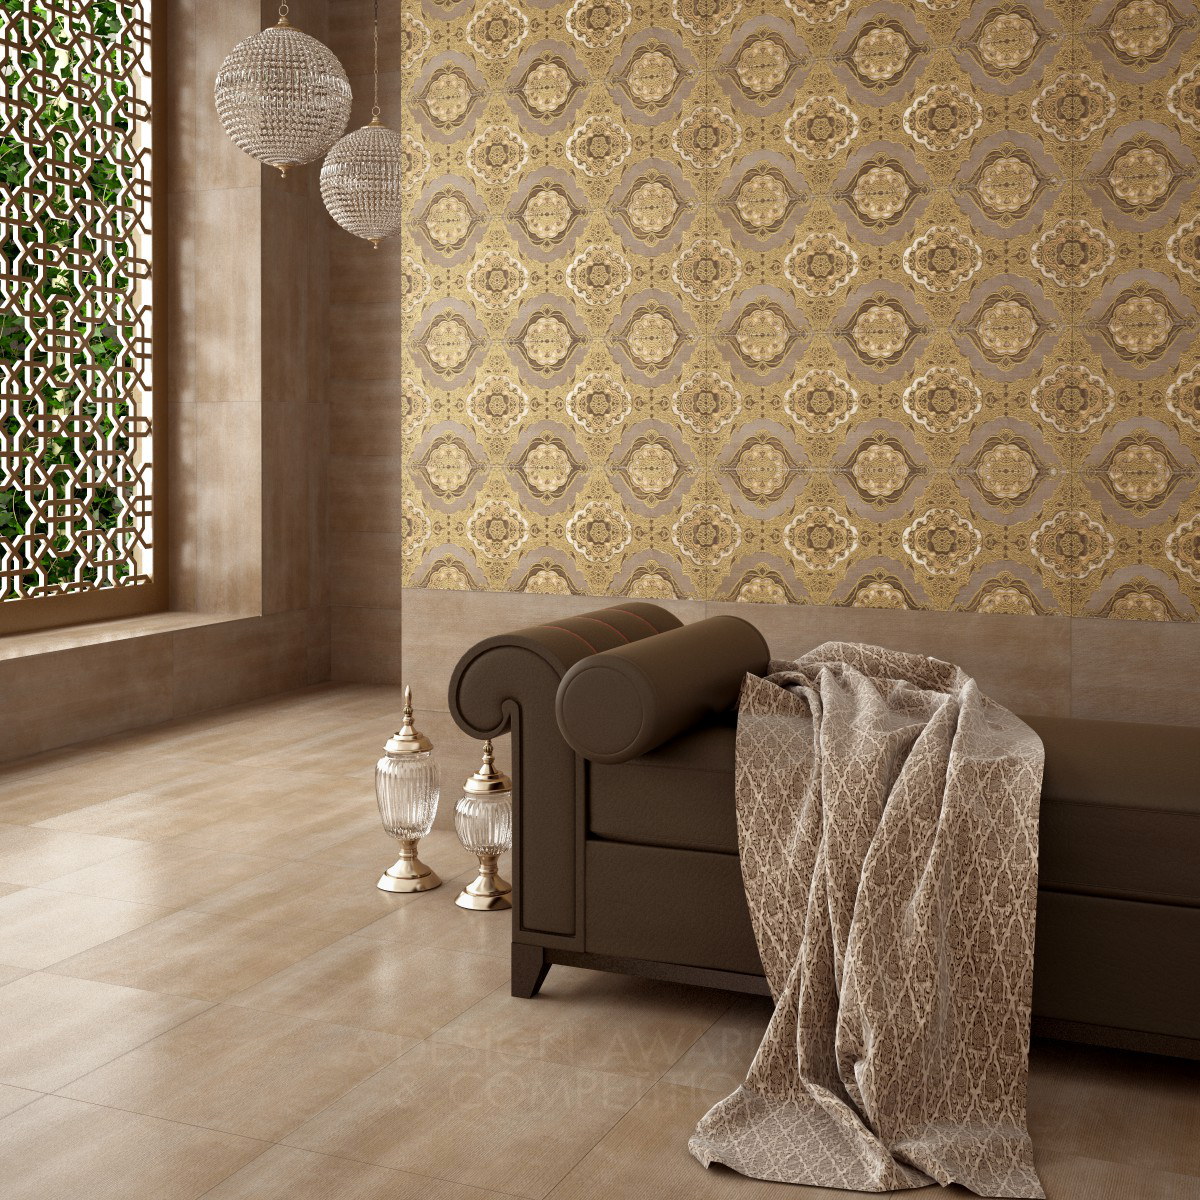 Sultan <b>Ceramic Wall Tiles